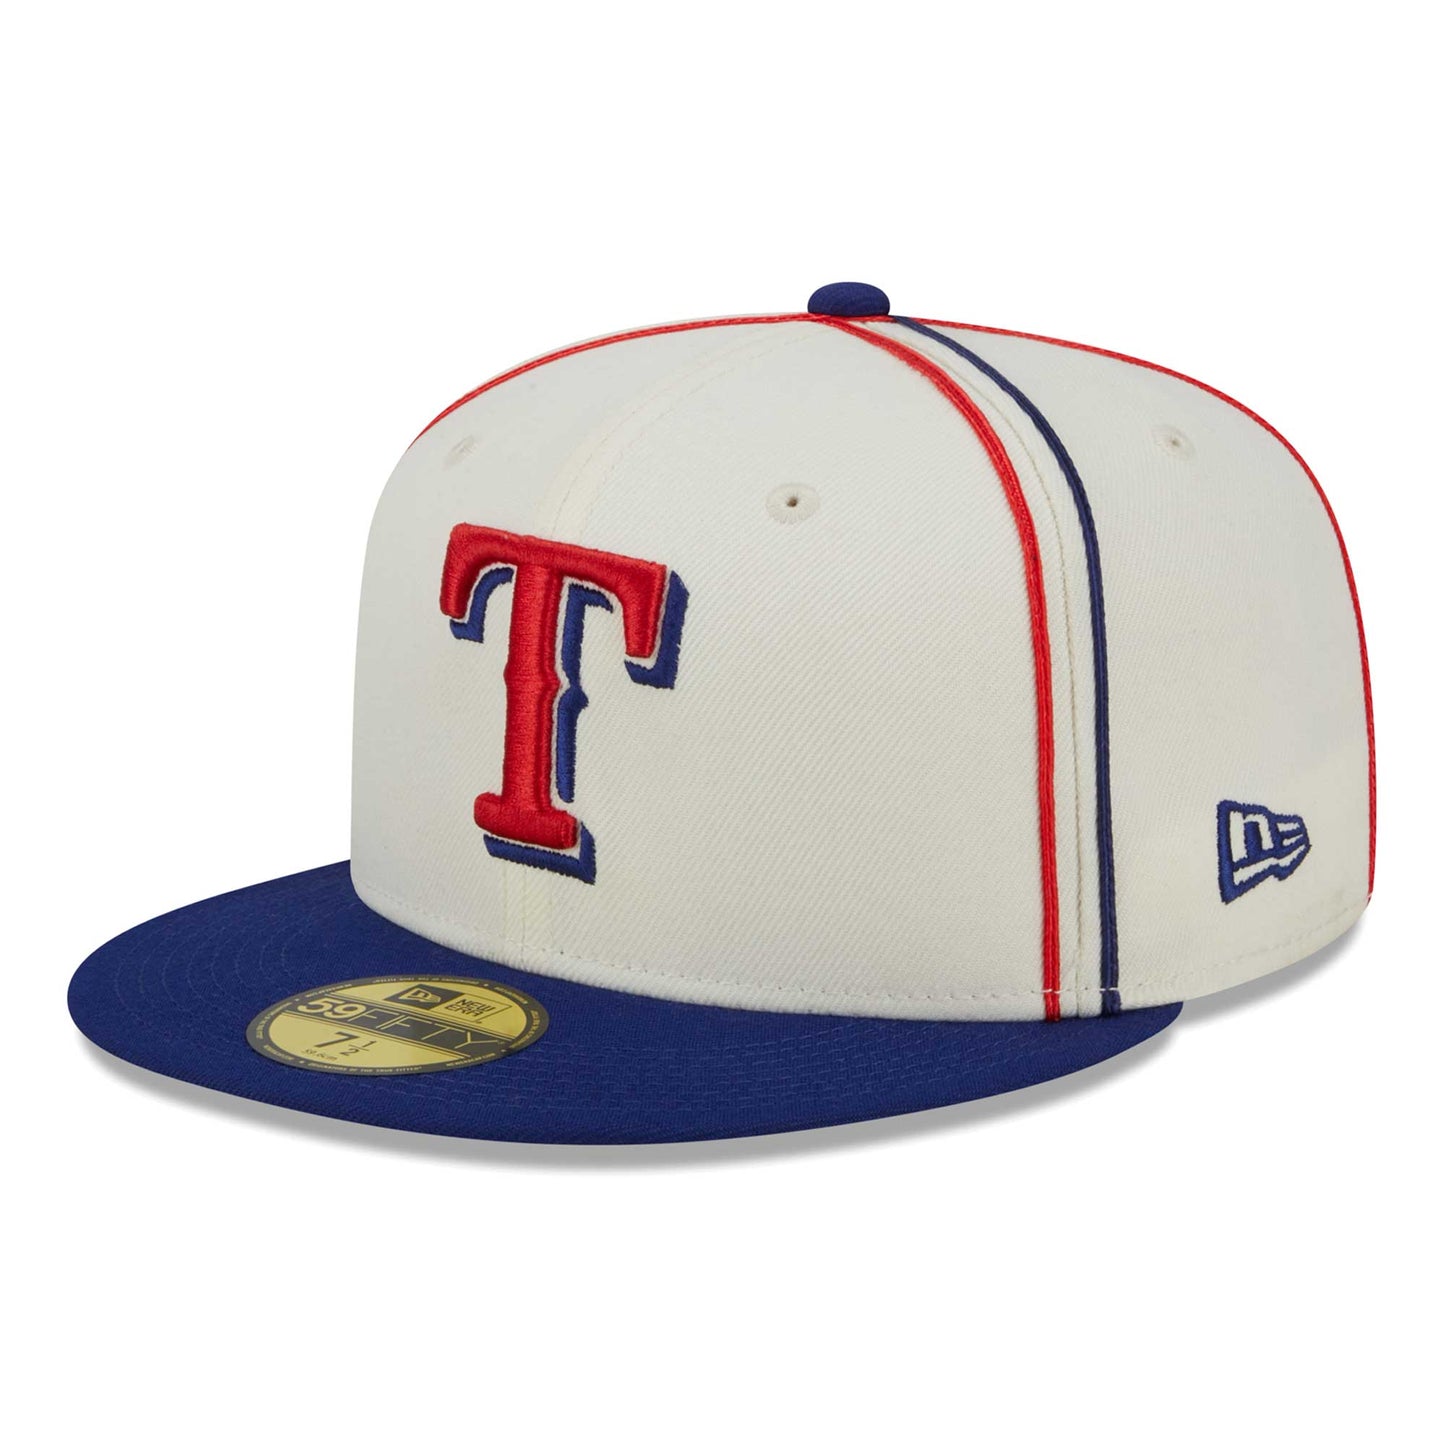 Texas Rangers New Era Chrome Sutash 59FIFTY Fitted Hat - Cream/Royal